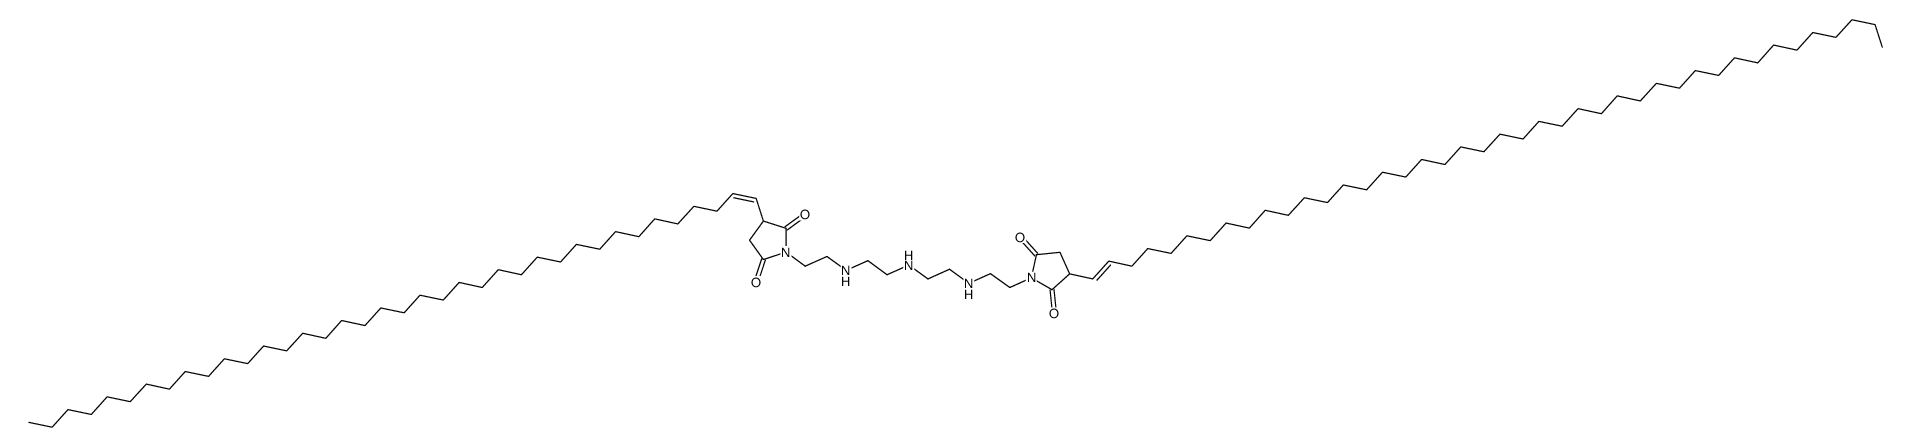 1-[2-[[2-[[2-[[2-[3-(dotetracontenyl)-2,5-dioxo-1-pyrrolidinyl]ethyl]amino]ethyl]amino]ethyl]amino]ethyl]-3-(octatriacontenyl)pyrrolidine-2,5-dione picture